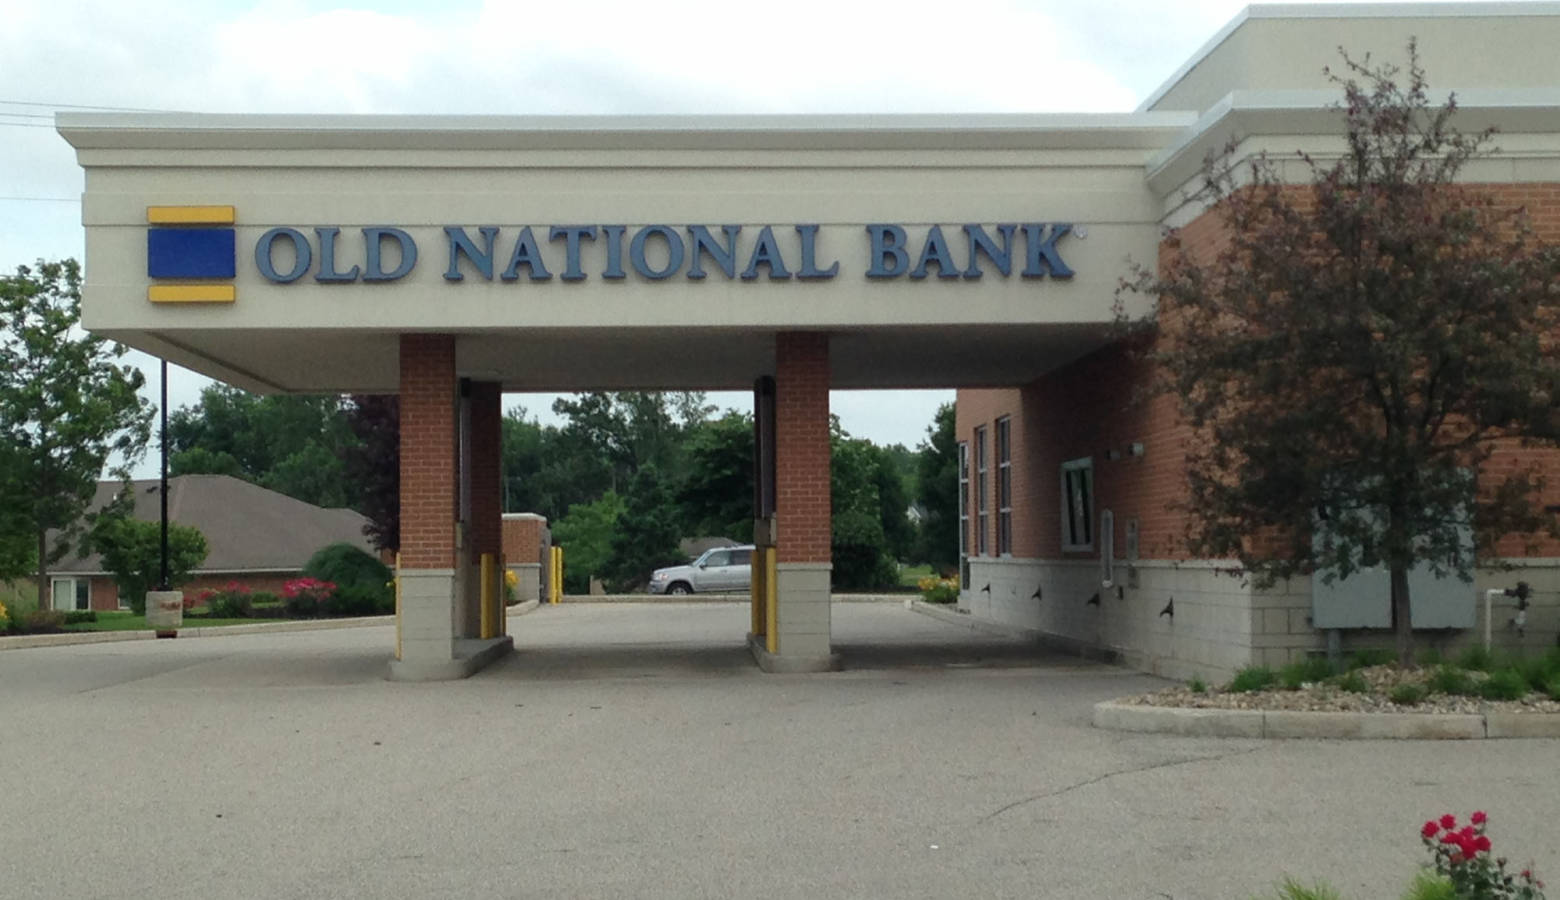 Old National Bank in Granger, Indiana. (Mrprofdrjjjj/Wikimedia Commons)